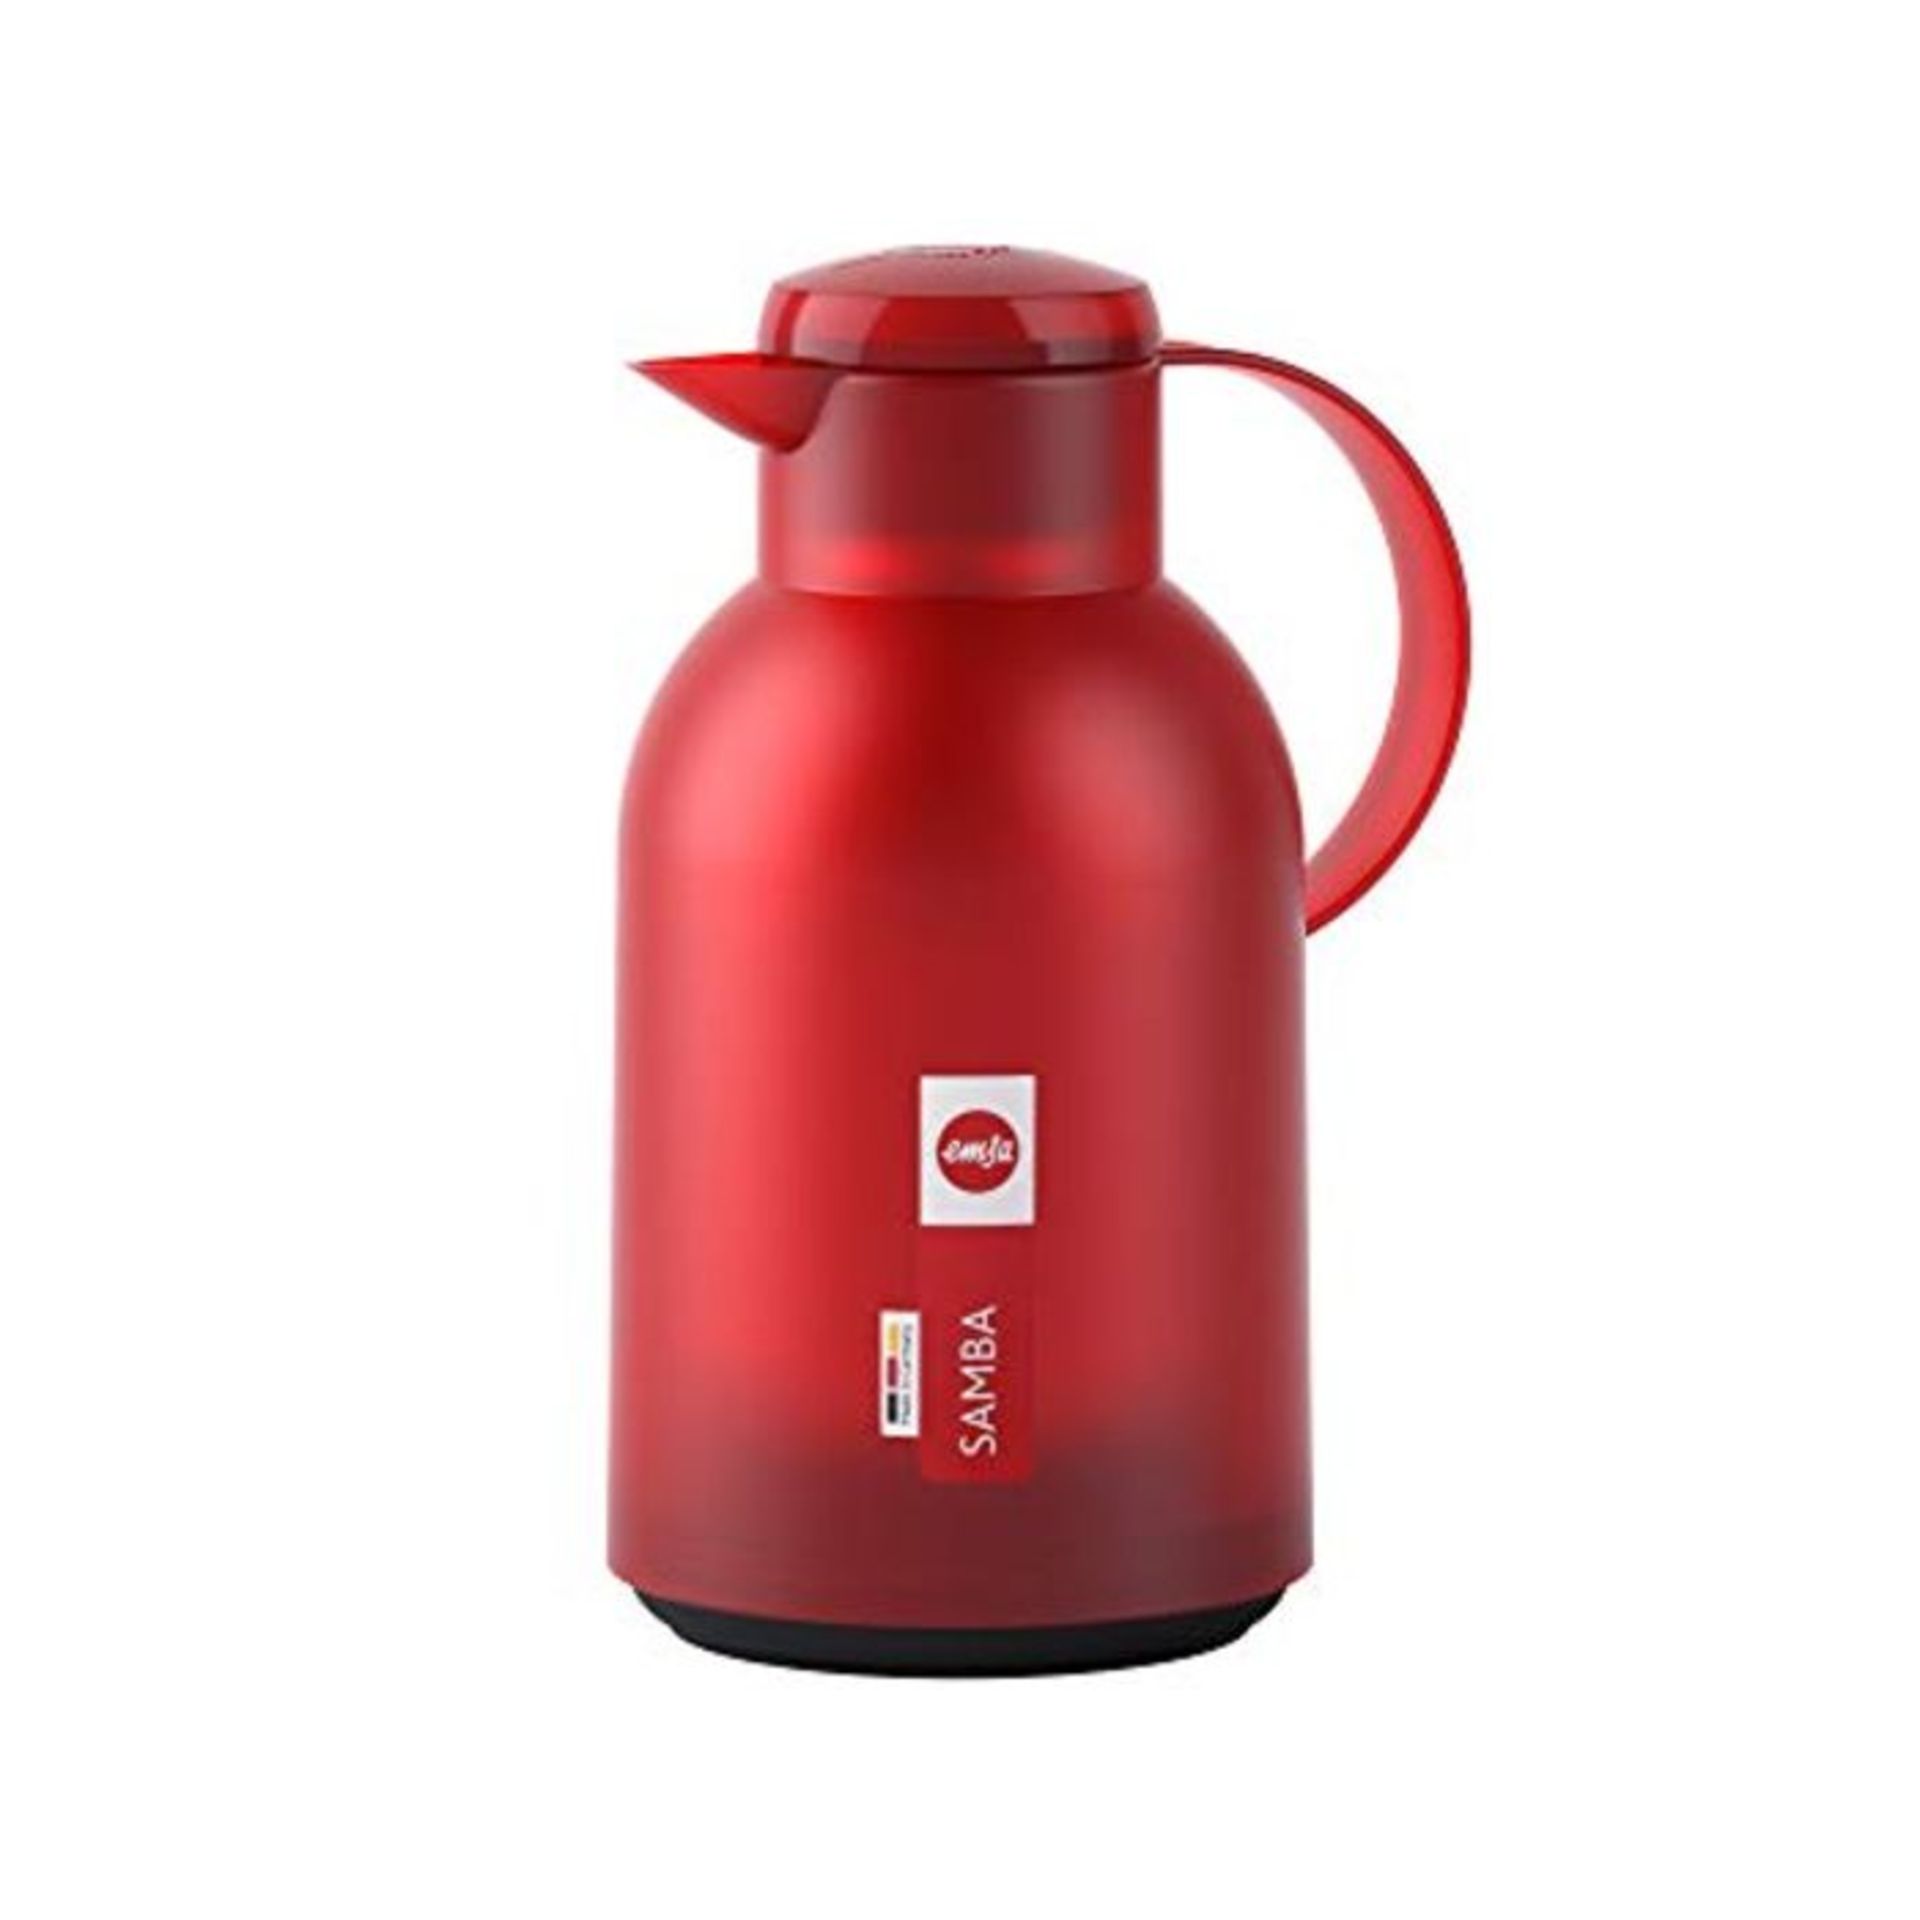 Emsa N4011700 Insulated jug, Plastic